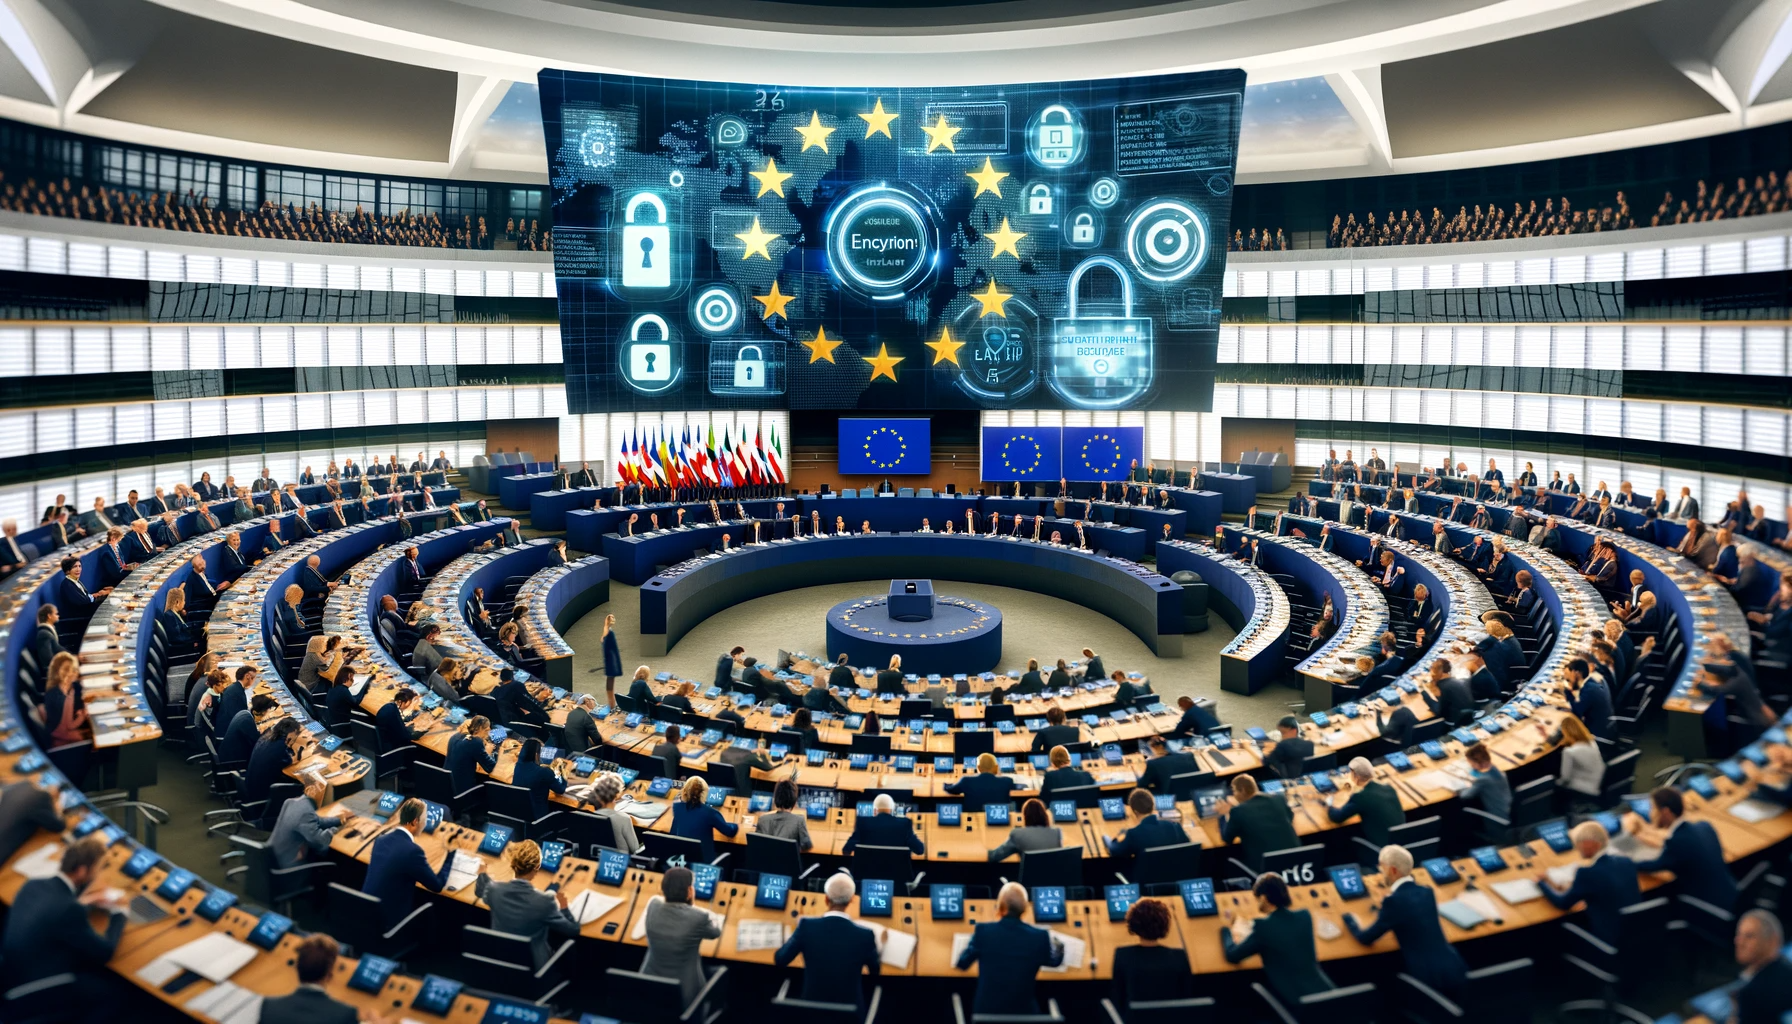 EU-parlamentarikere debatterer livlig om digitalt personvern og sikkerhet i en moderne parlamentssal, med teknologi og krypteringssymboler.